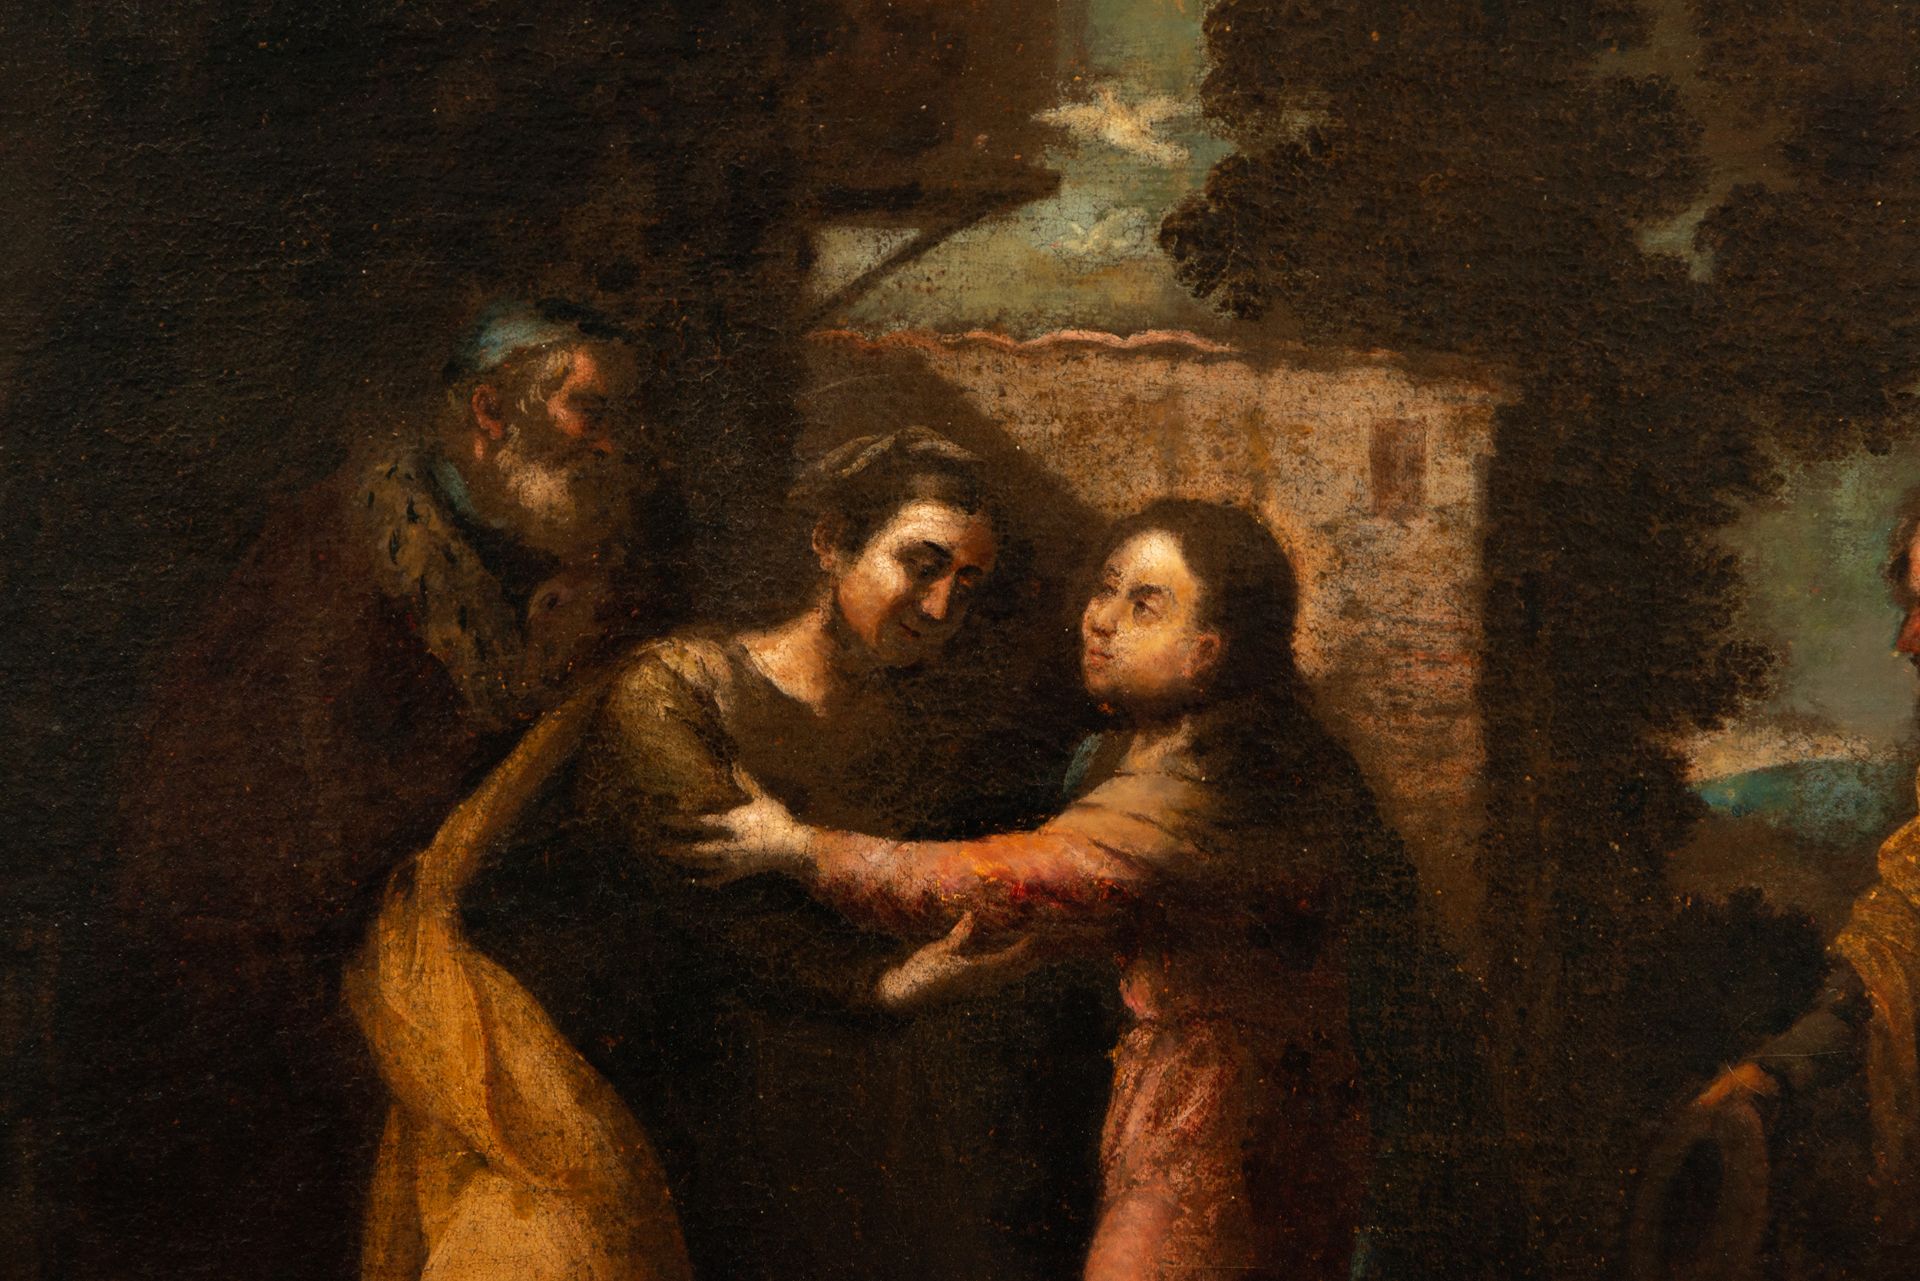 Saint Anne and Saint Joachim receiving the Virgin and Saint Joseph, 17th century Italian school - Image 3 of 5